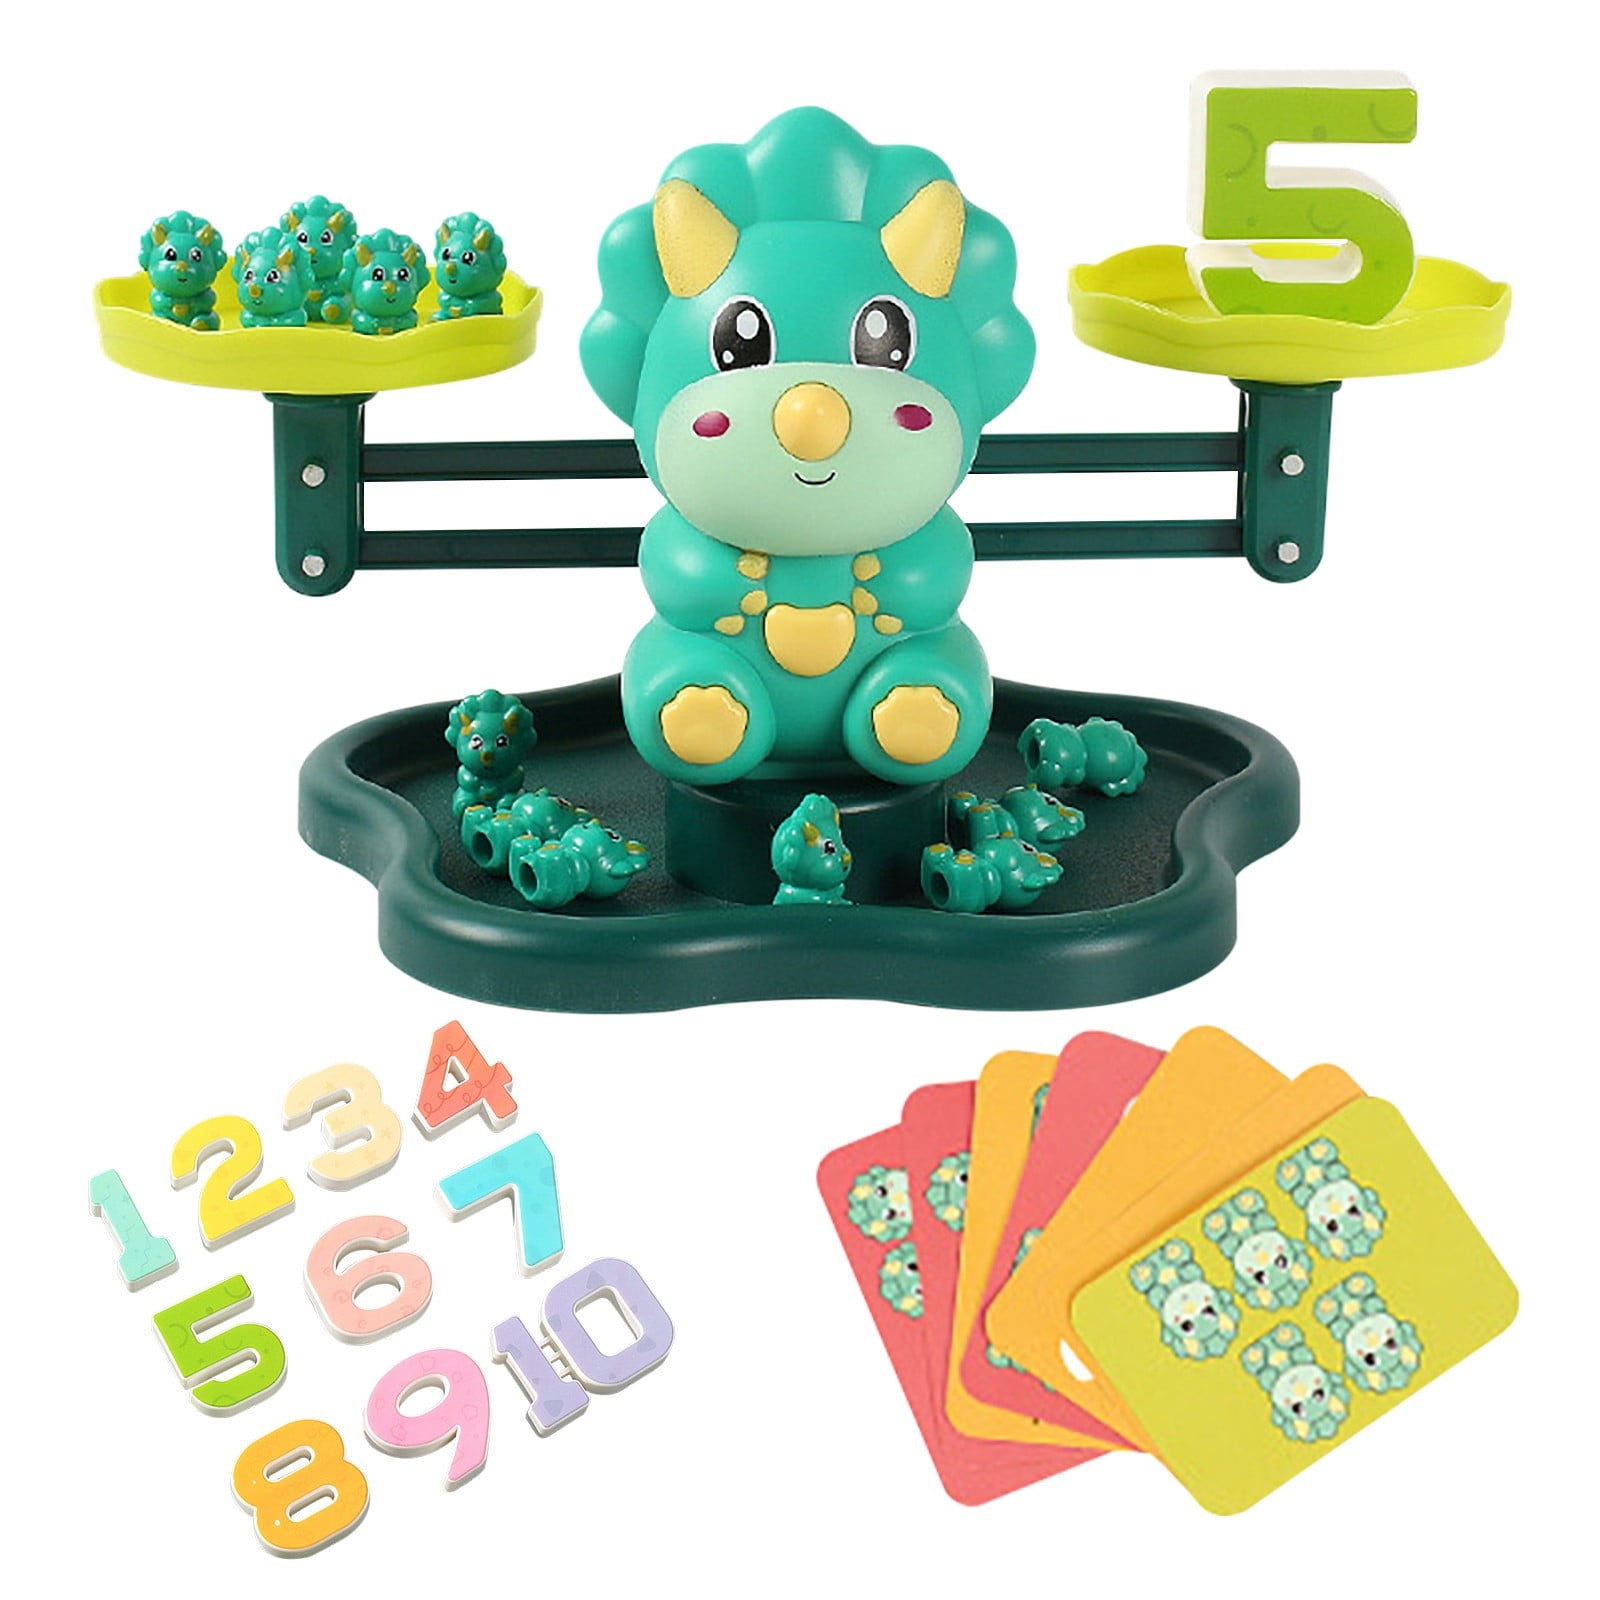 Educational Sensory Learning Toys for Children ECR4Kids Jumbo Connect-a-Cog Math Manipulatives Building Kit 240-Piece Set 